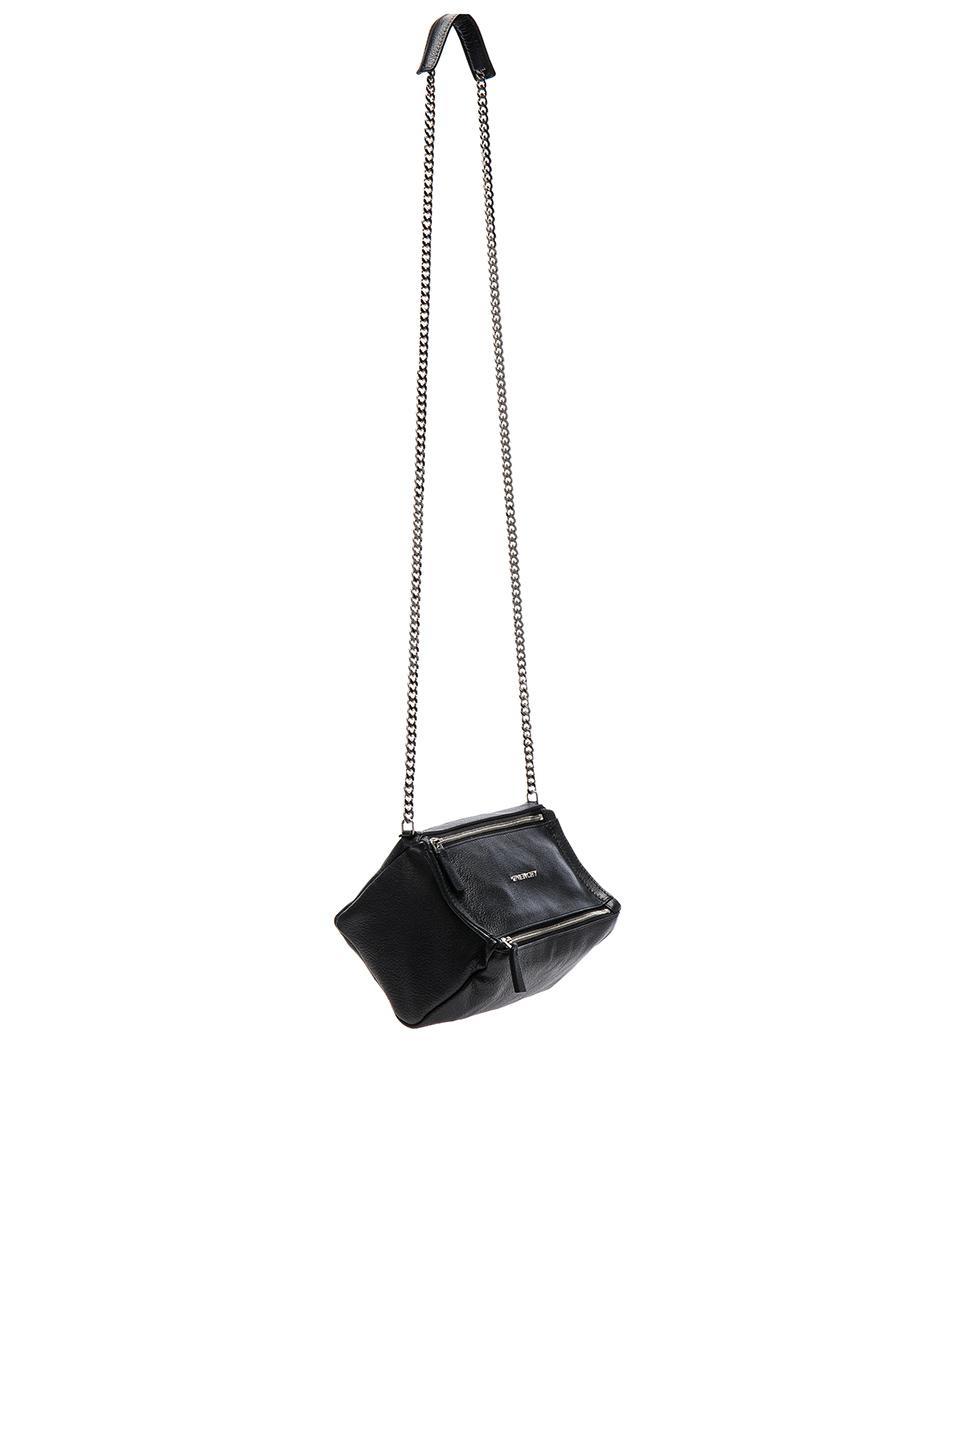 Givenchy Pandora Mini Sugar Chain Bag in Black | Lyst